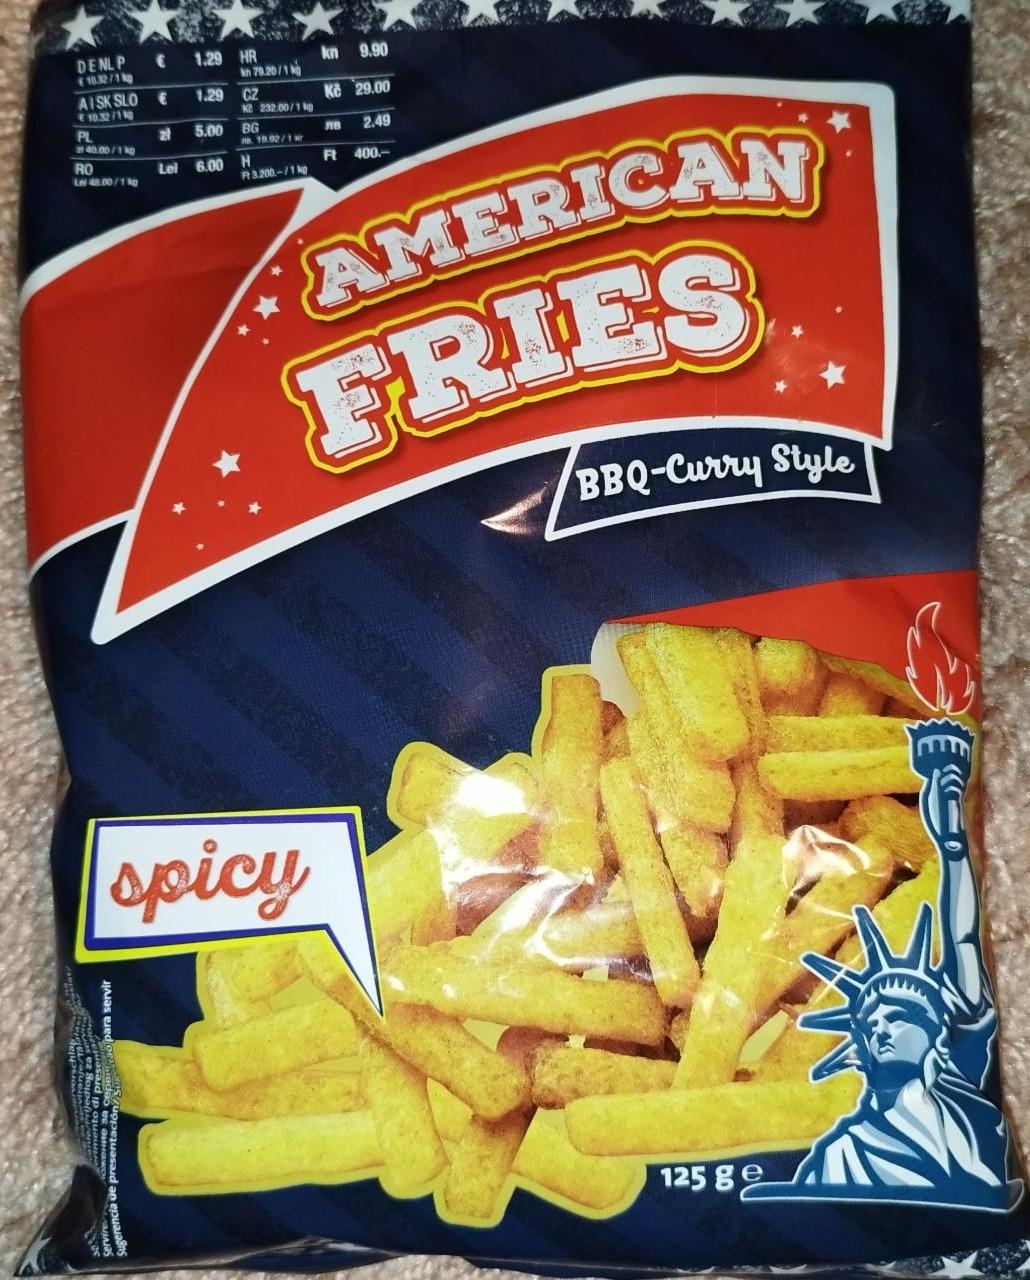 Zdjęcia - American Fries BBQ-Curry Style XOX